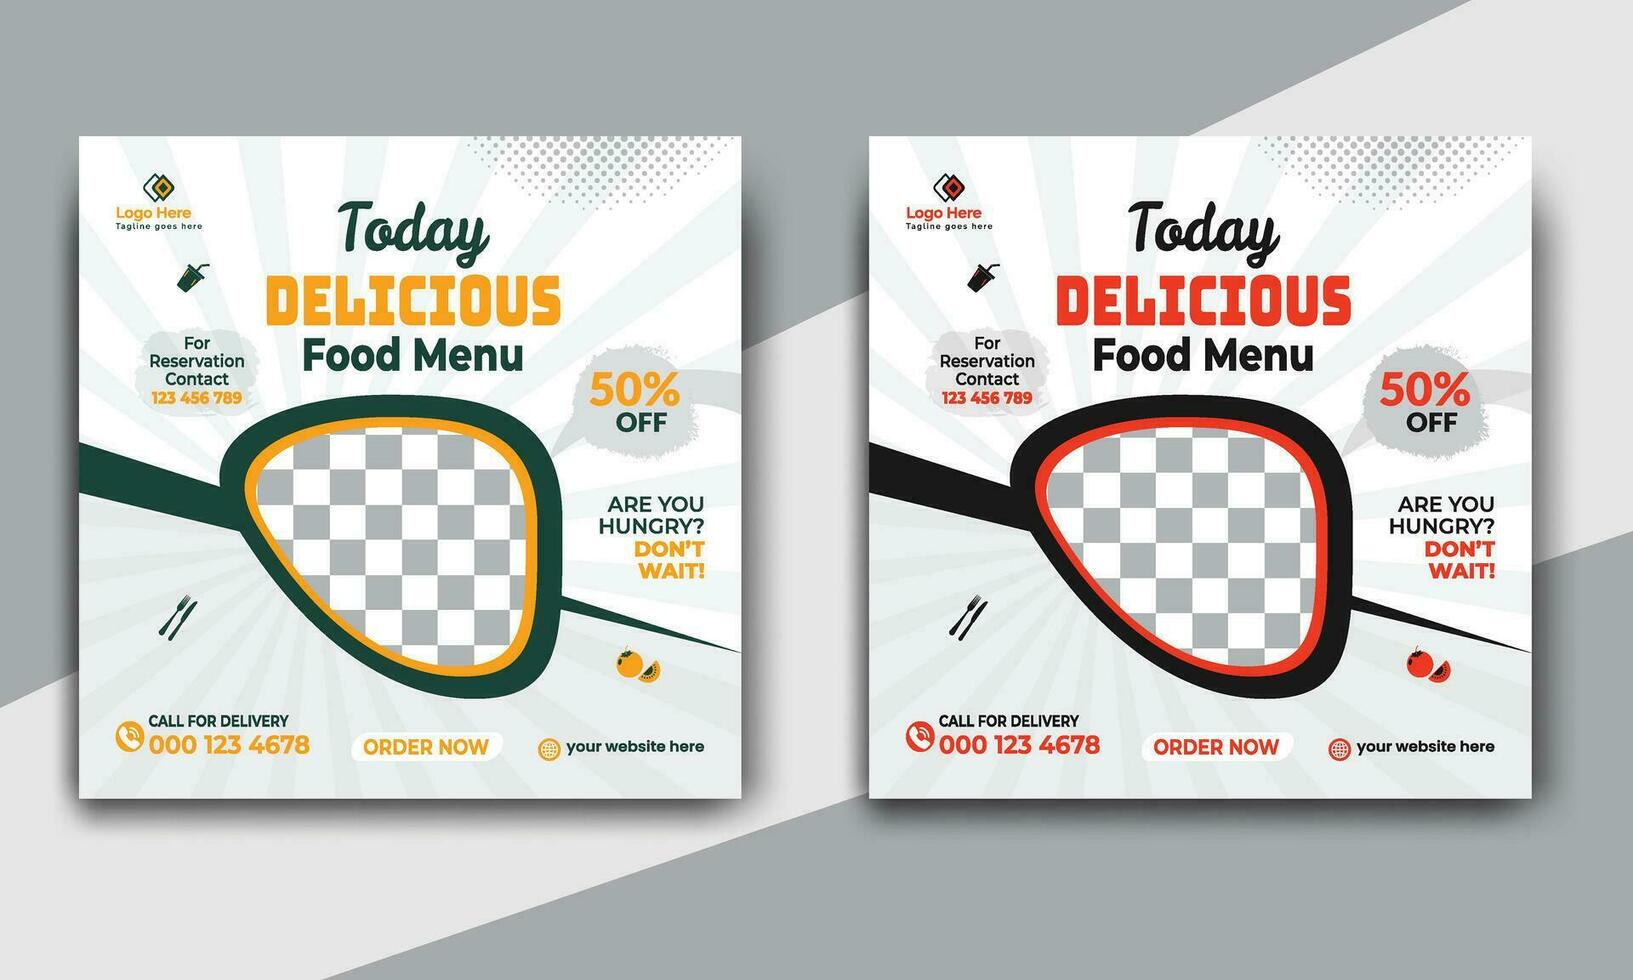 rápido comida restaurante negocio márketing social medios de comunicación enviar o web bandera modelo diseño con resumen antecedentes. Fresco pizza, hamburguesa y en línea rebaja promoción volantes o póster diseño. vector